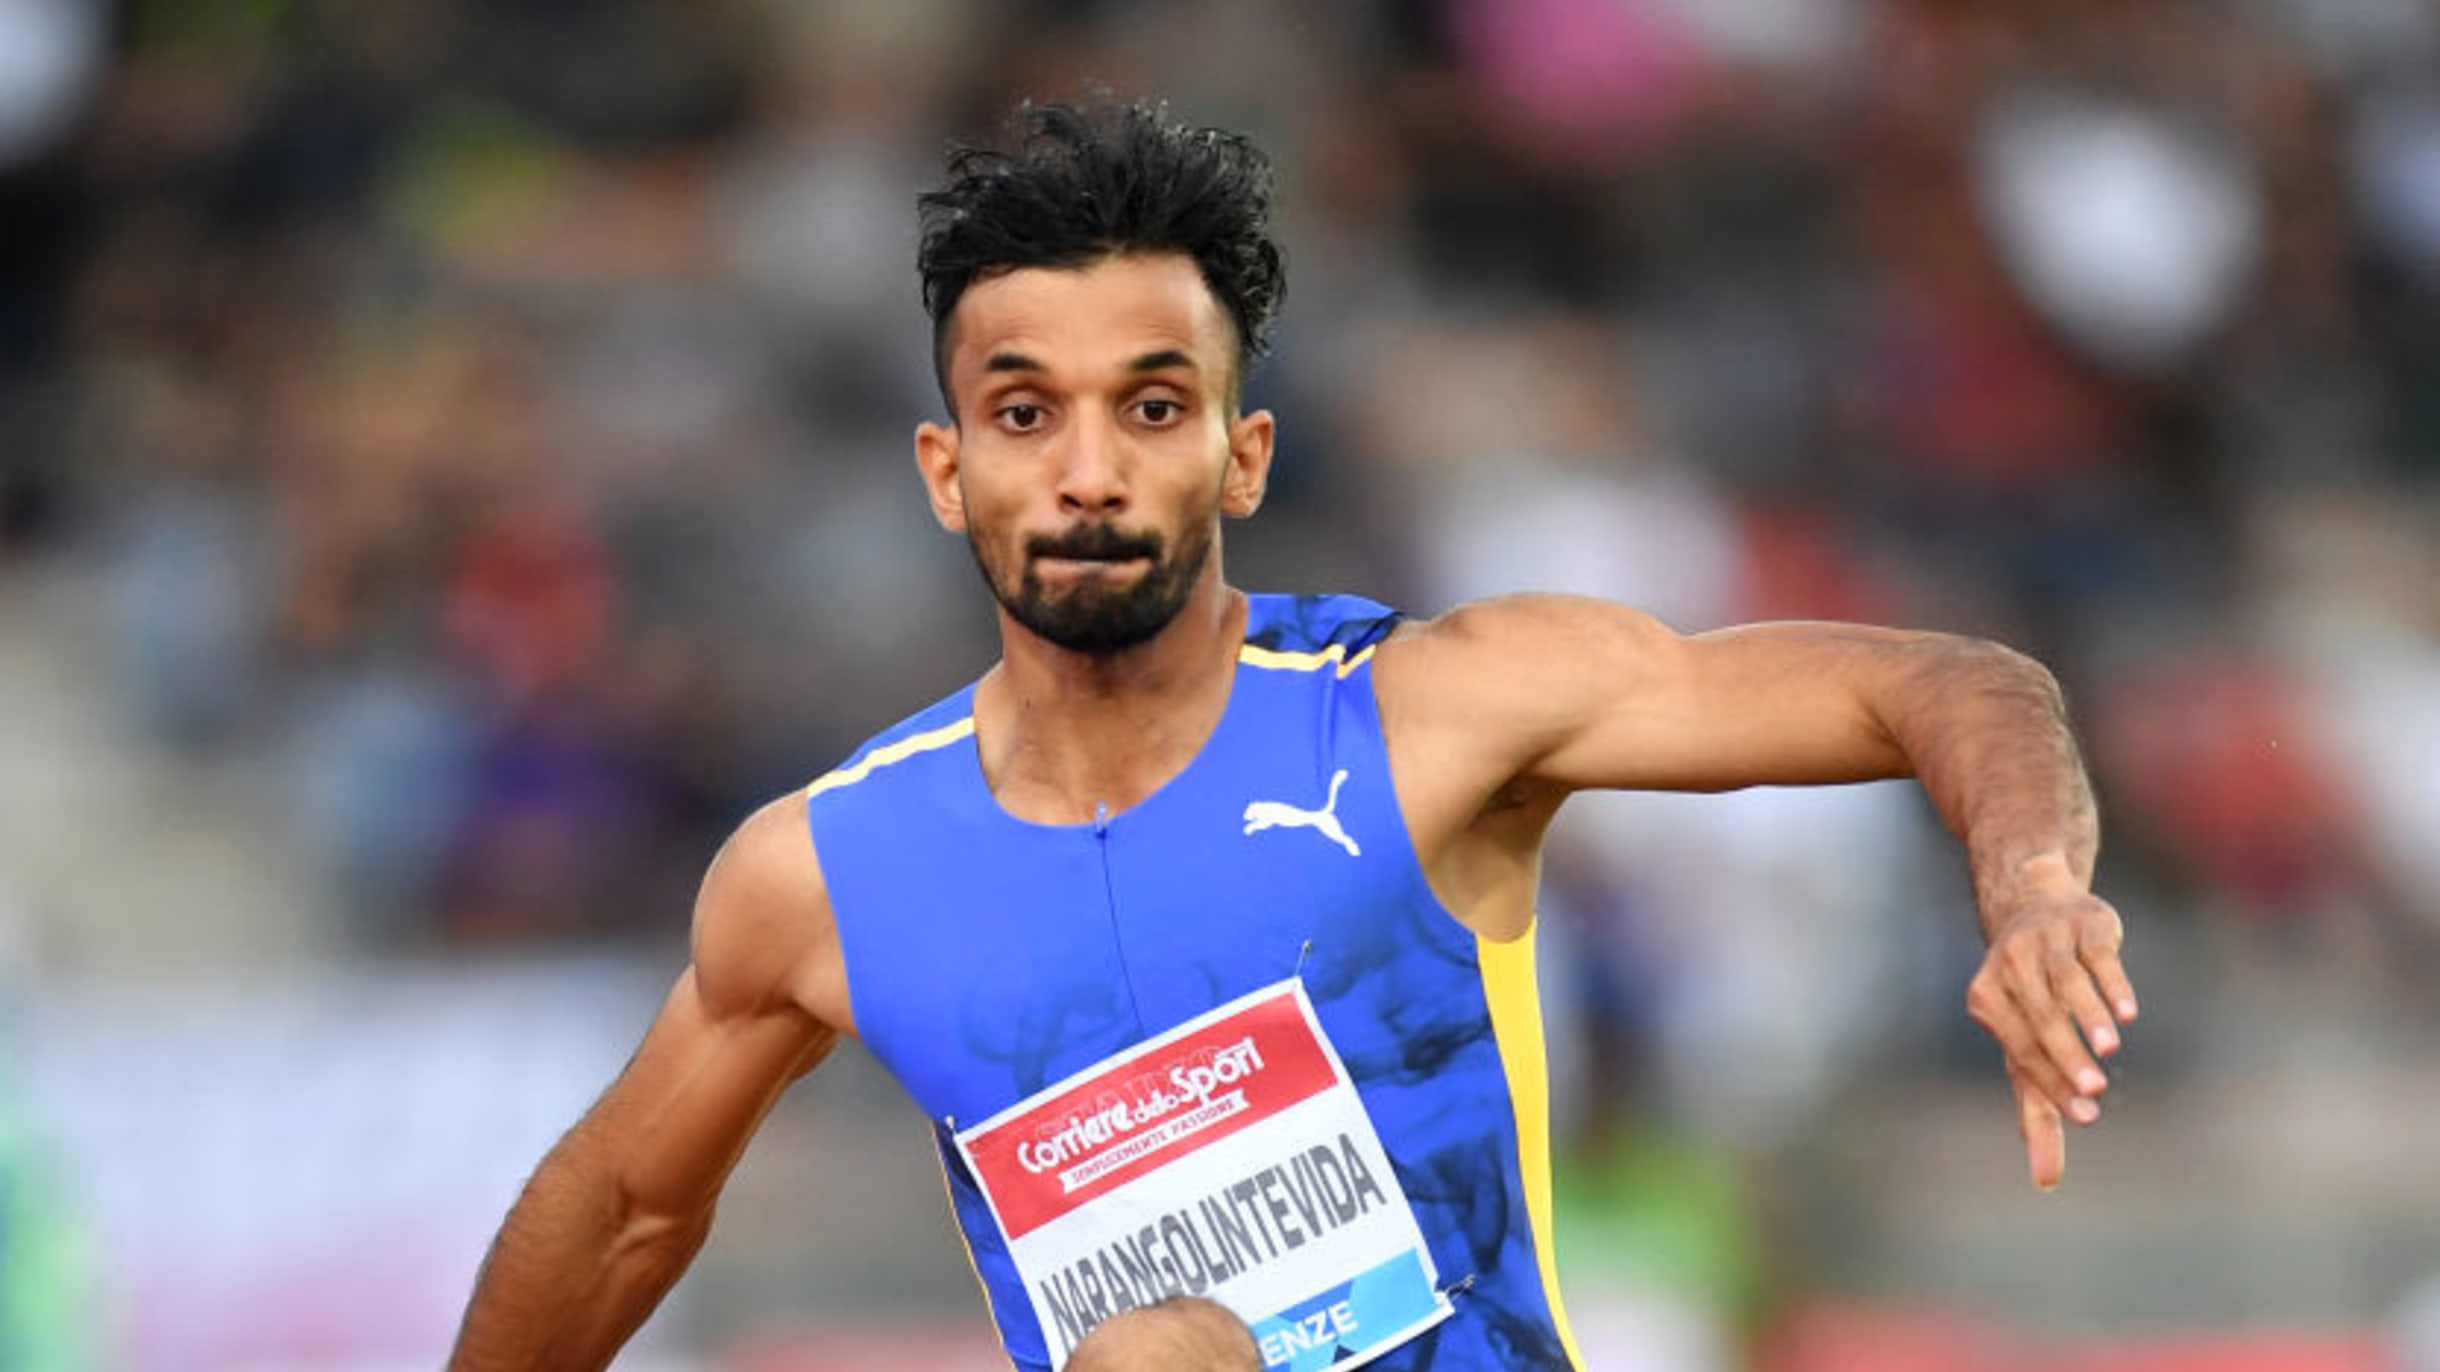 Abdulla Aboobacker Narangolintevida, of India, competes during